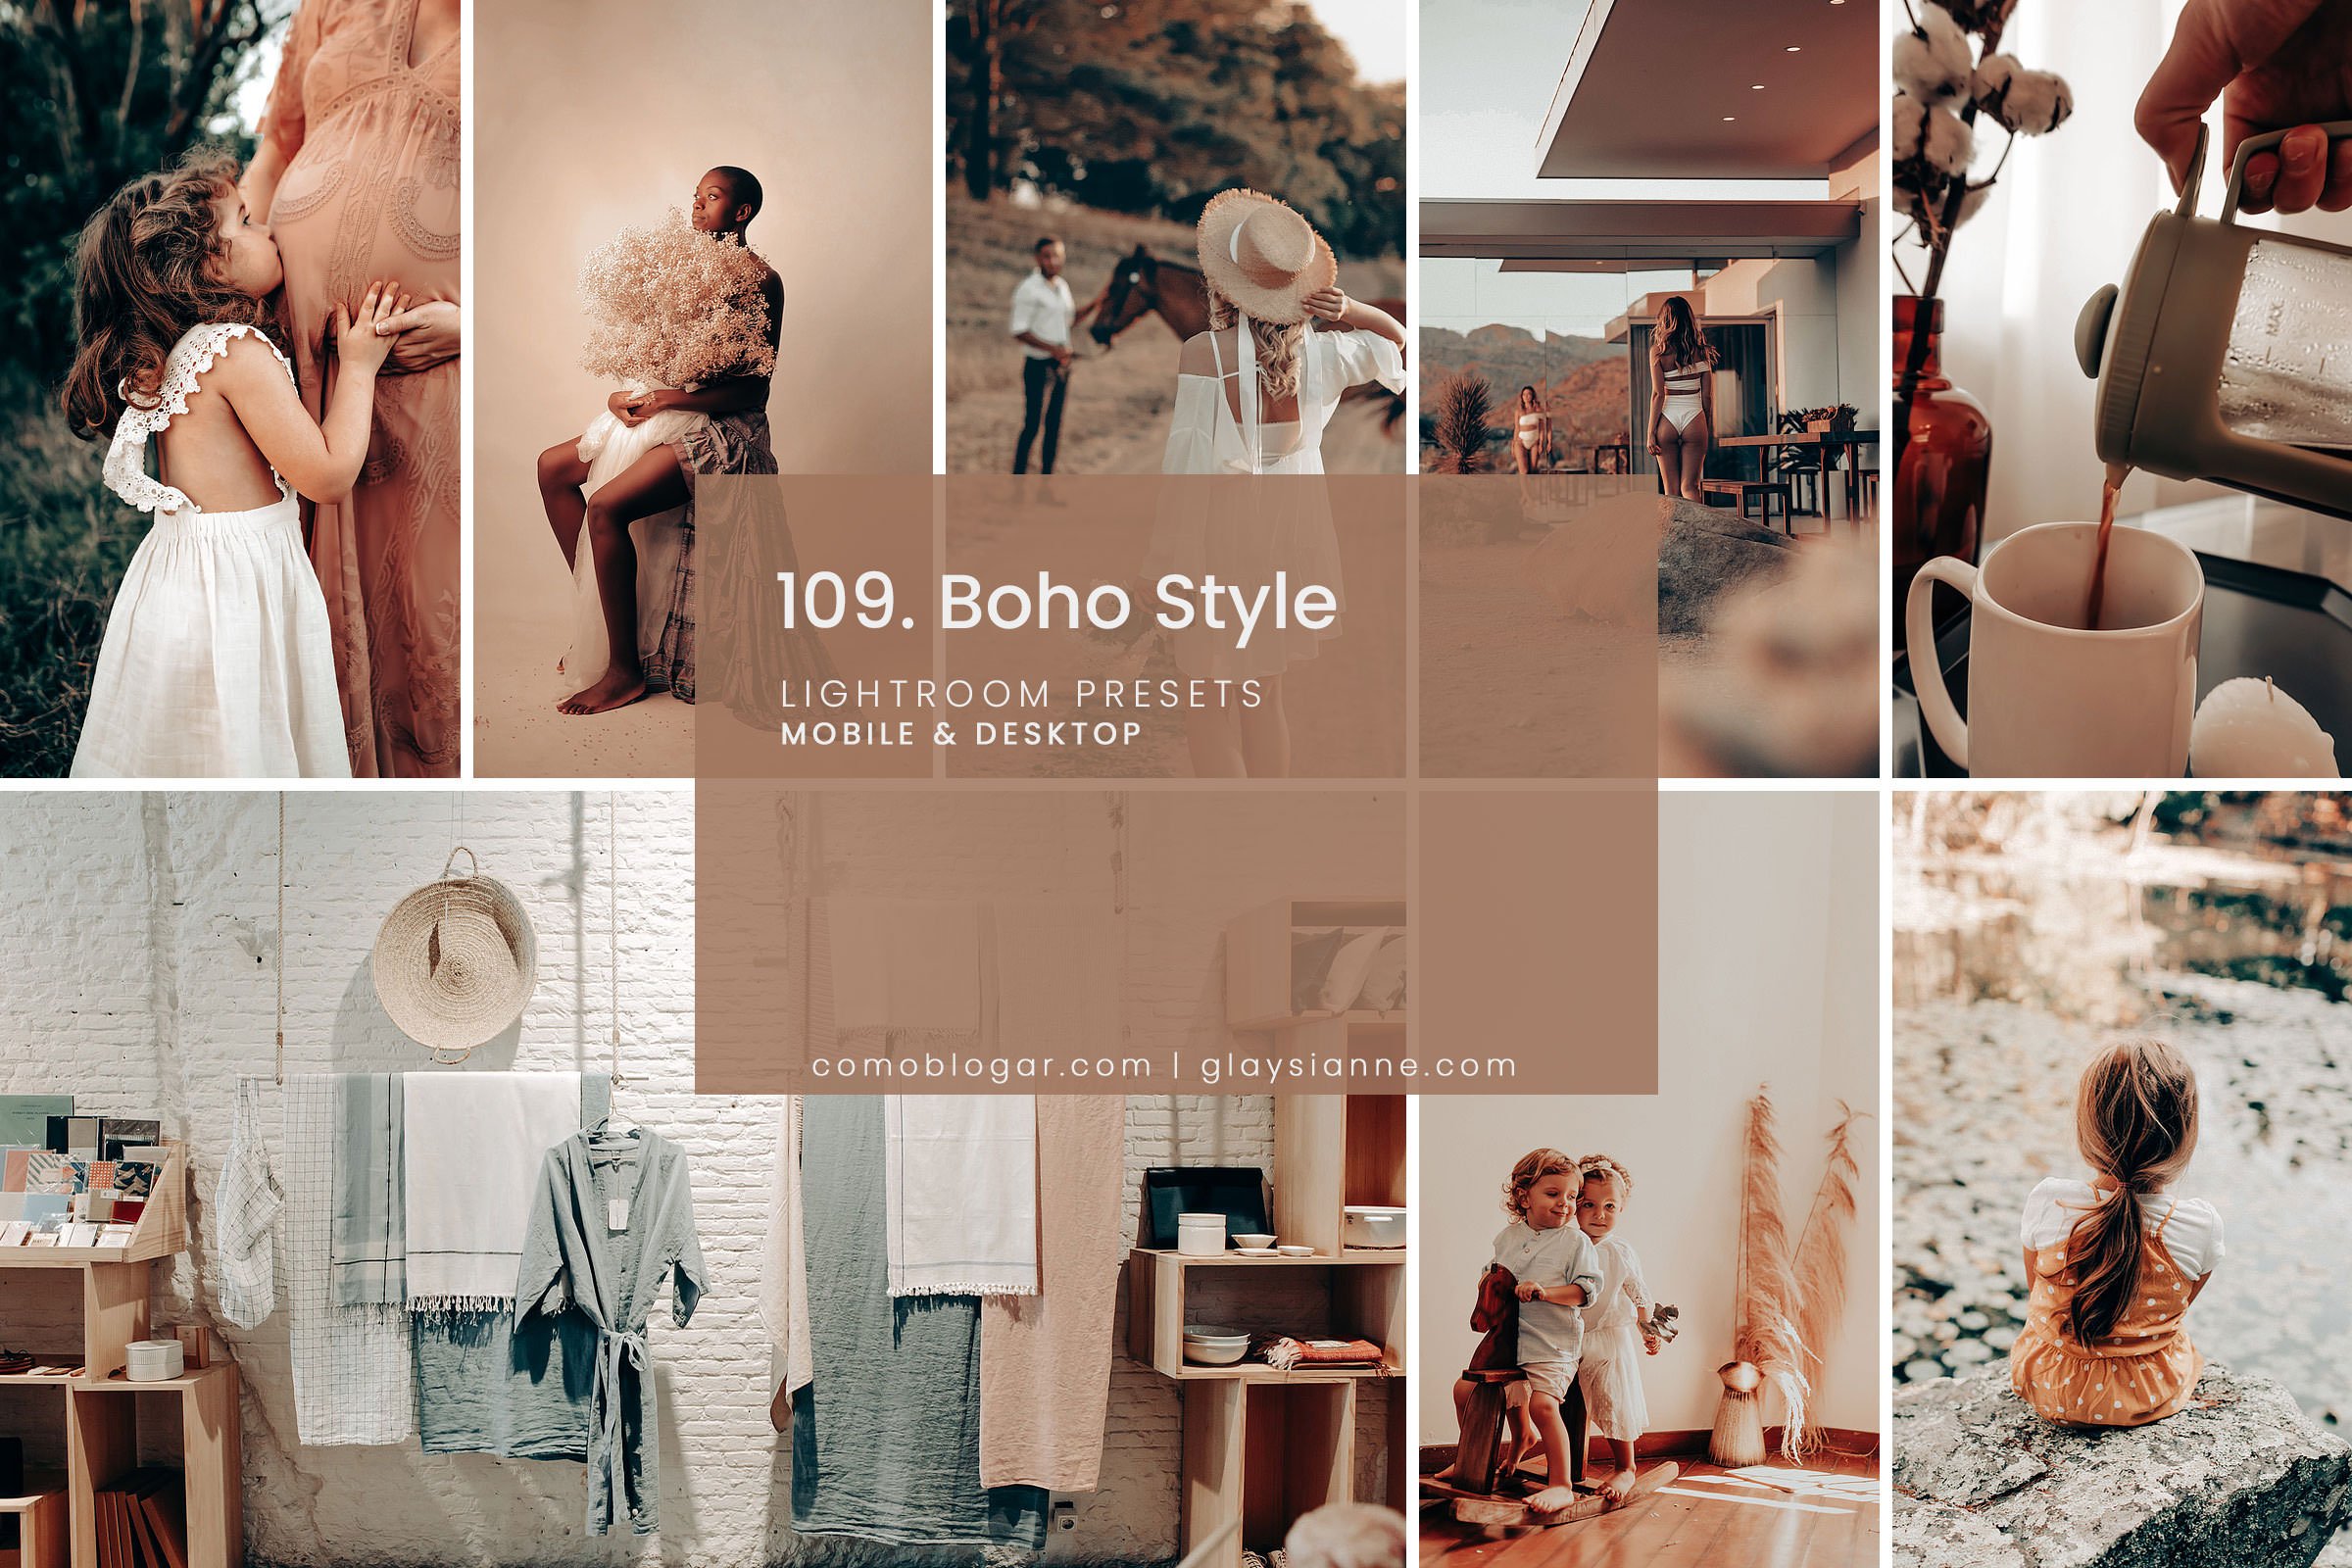 109. Boho Stylecover image.